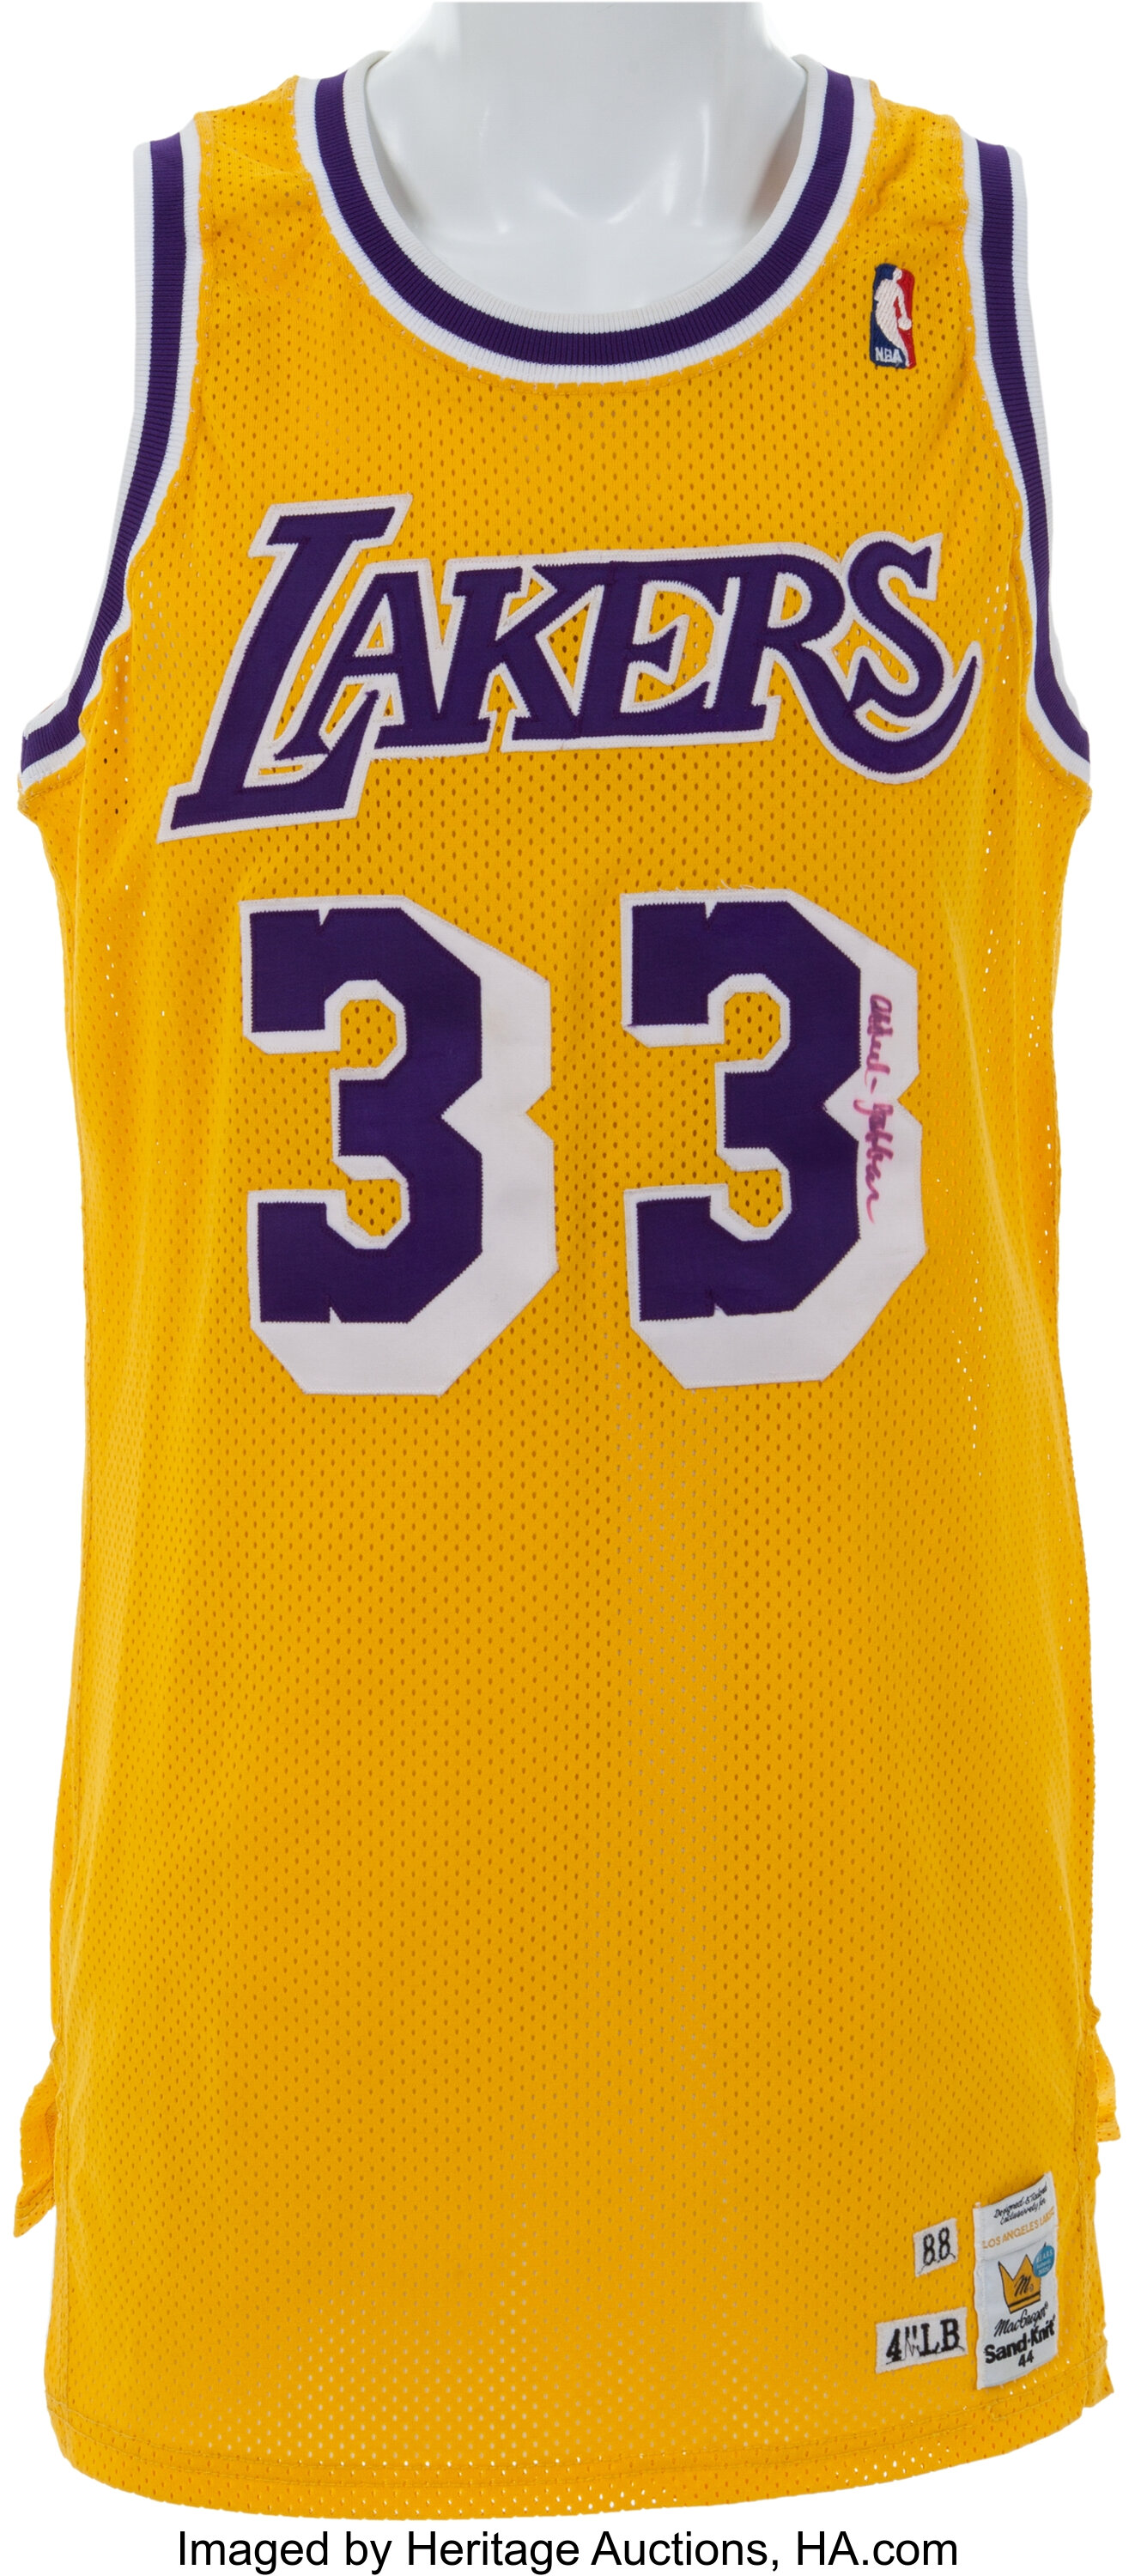 1986-87 Kareem Abdul-Jabbar Game Worn & Signed Los Angeles Lakers